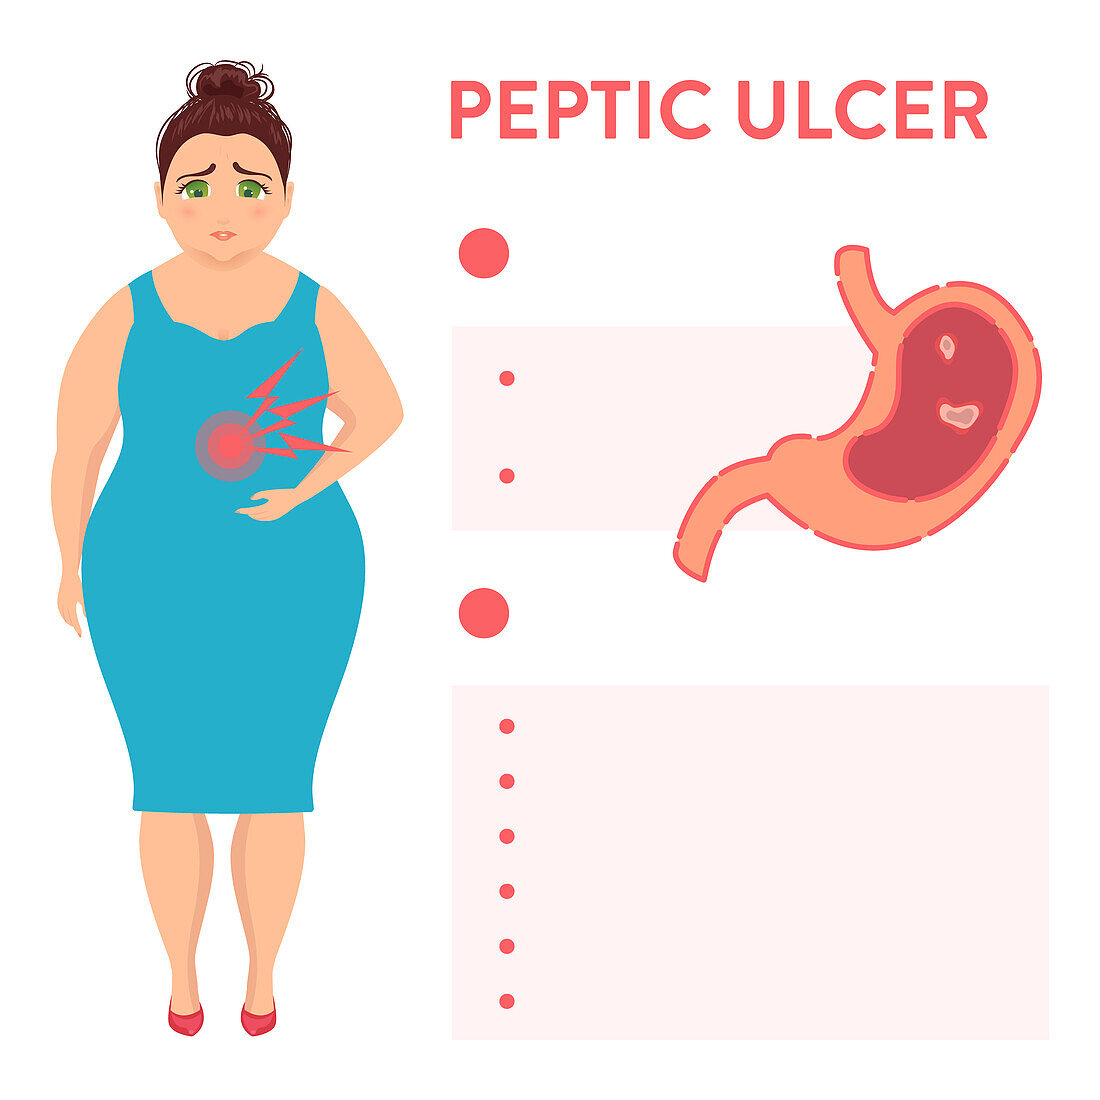 Peptic ulcer symptoms, illustration